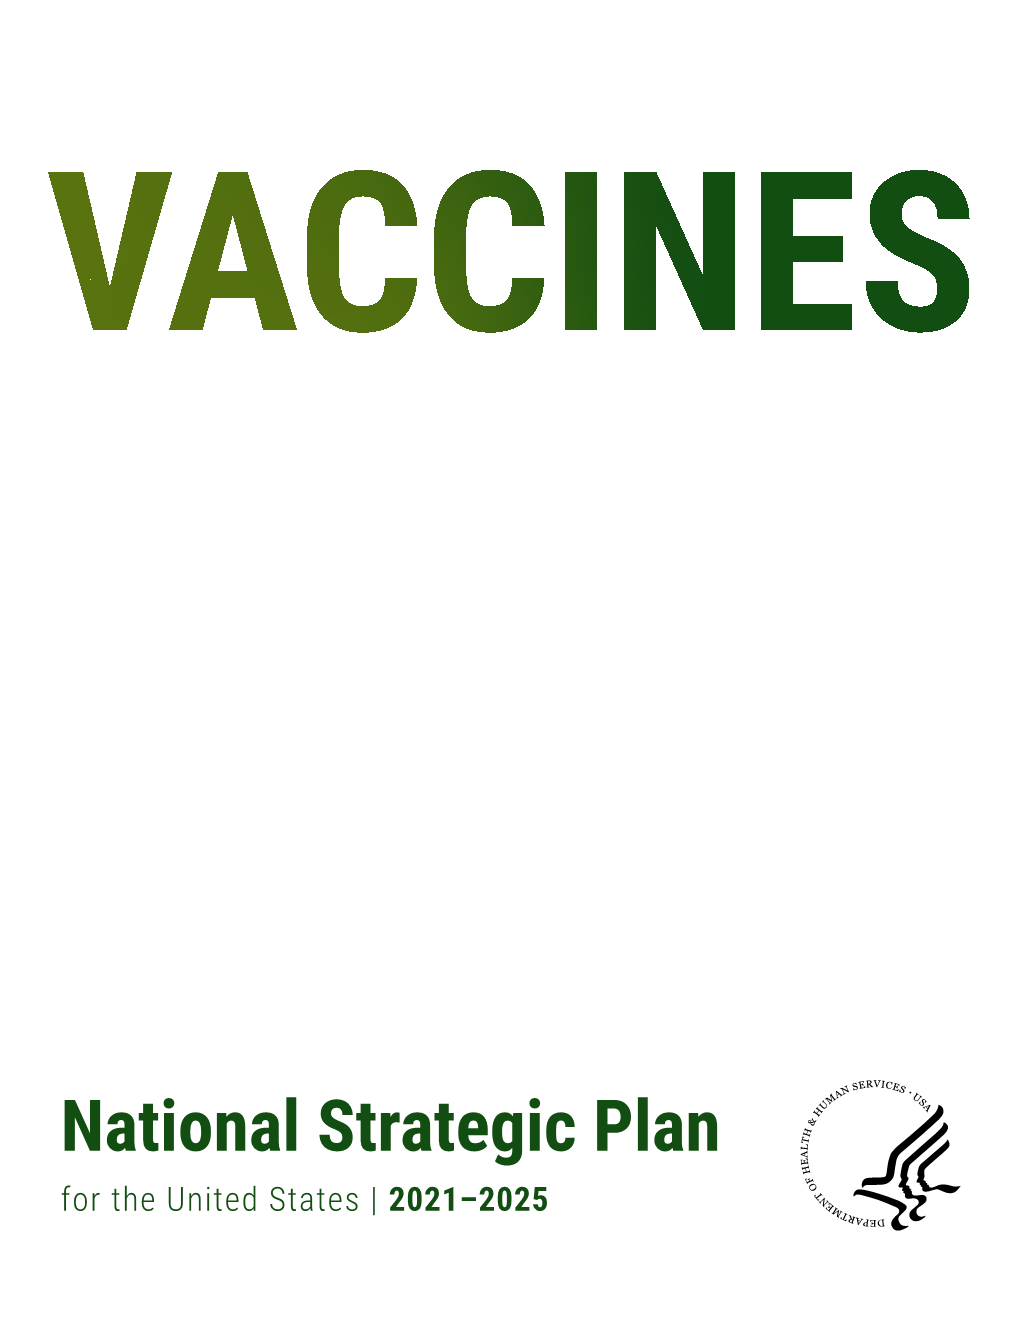 Vaccines National Strategic Plan 2021-2025